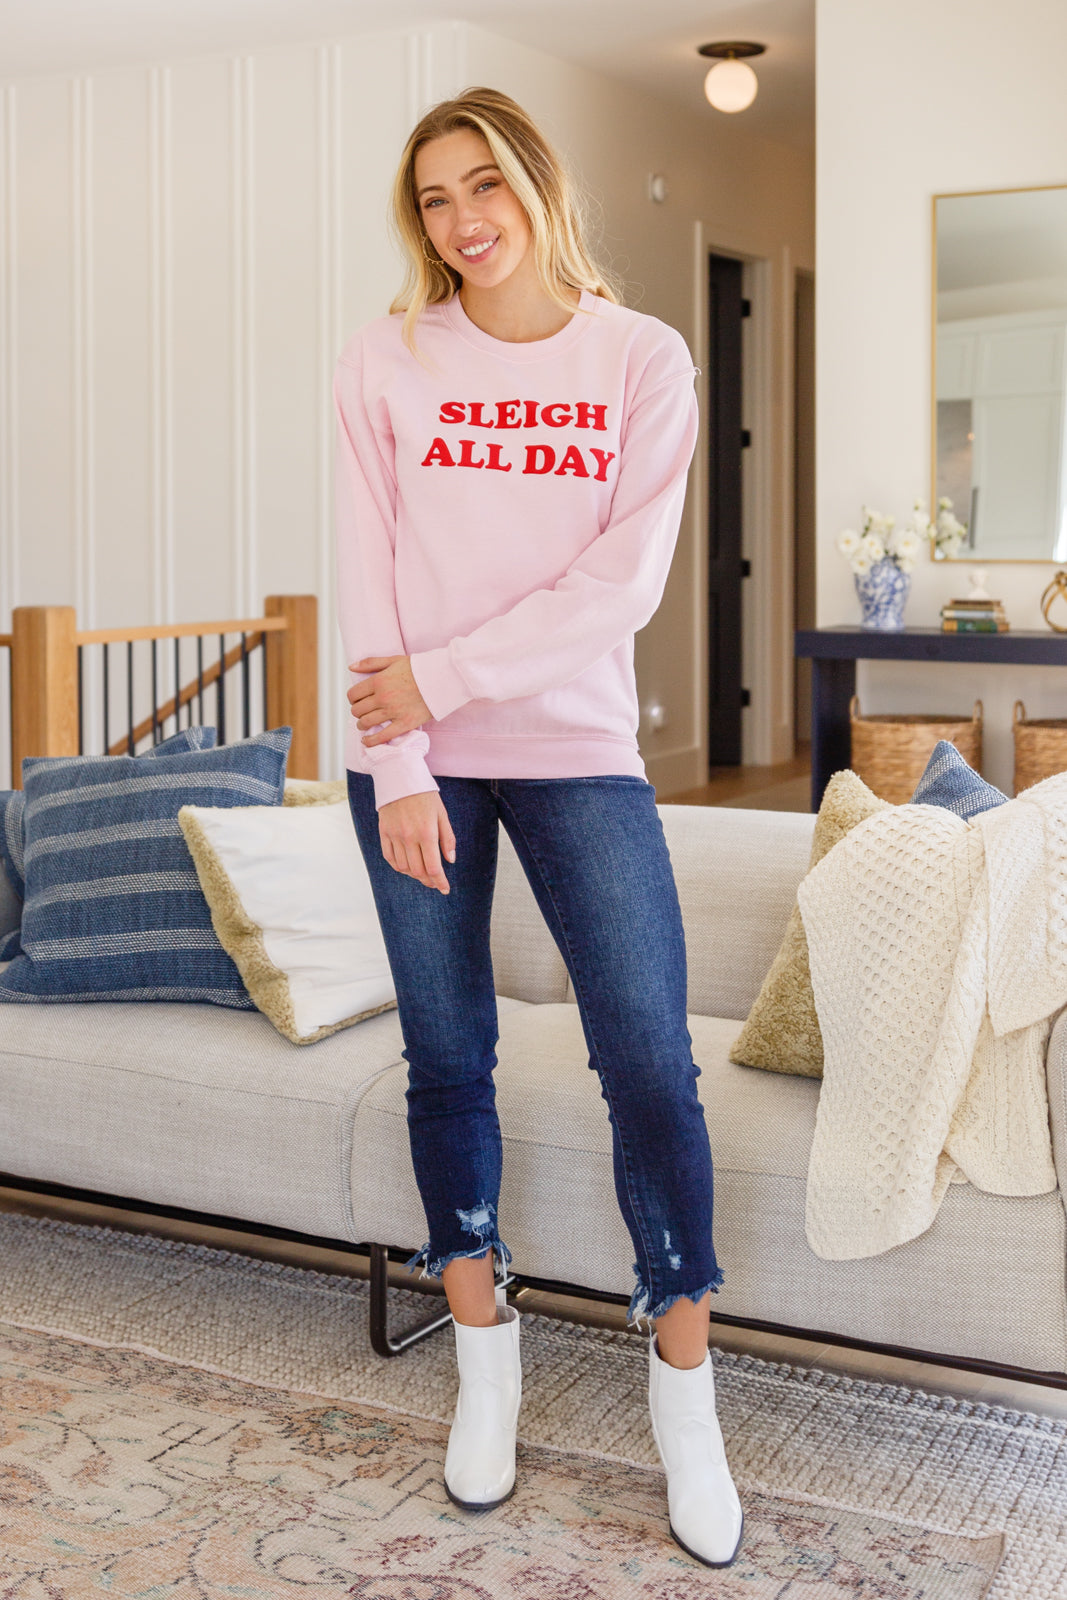 Sleigh All Day Sweatshirt In Pink - 11/15/2022